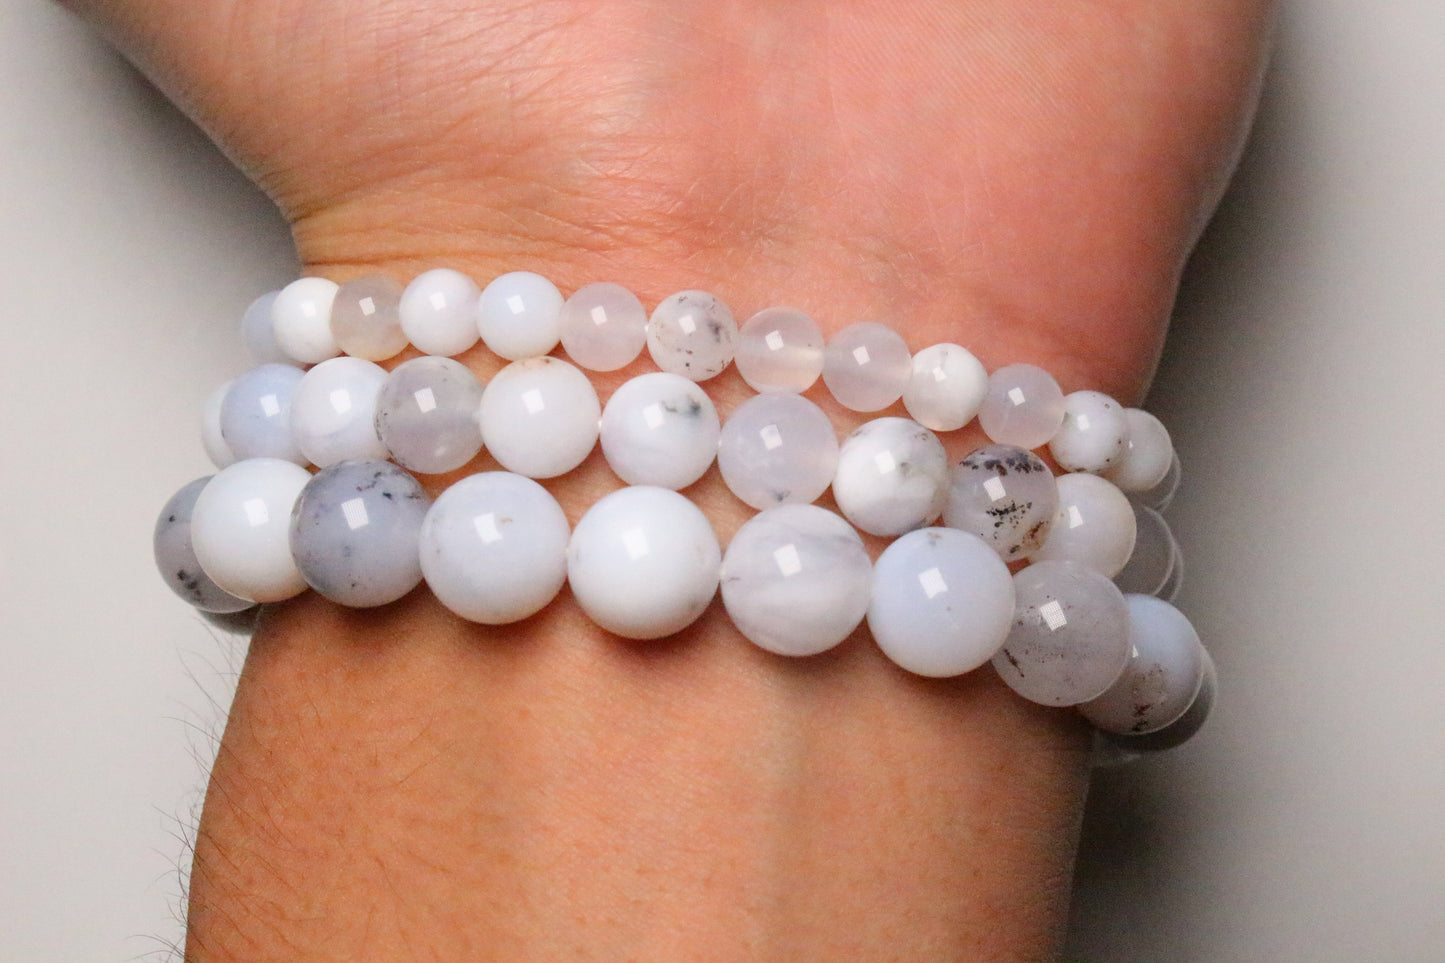 White opal bracelet